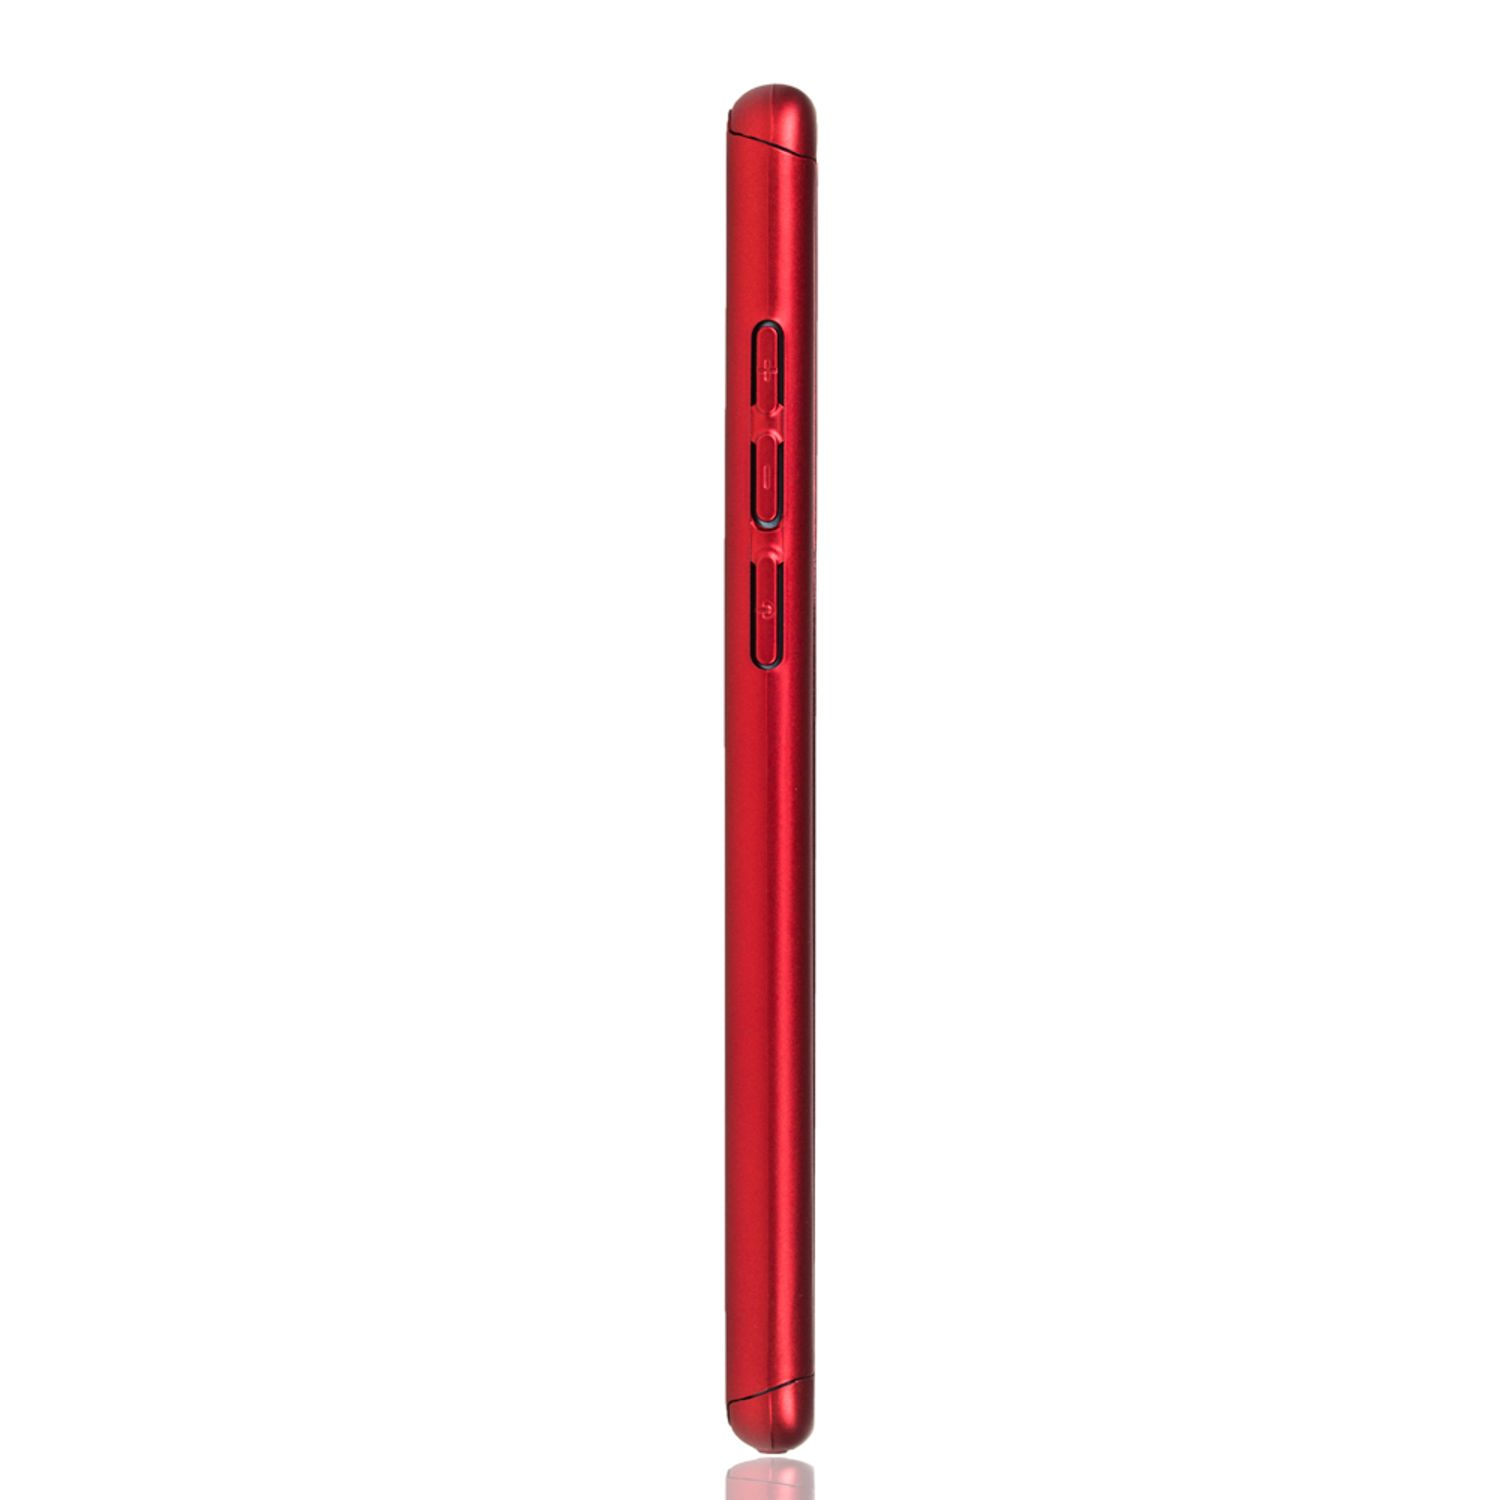 KÖNIG DESIGN Schutzhülle, Cover, Full Rot P30, Huawei